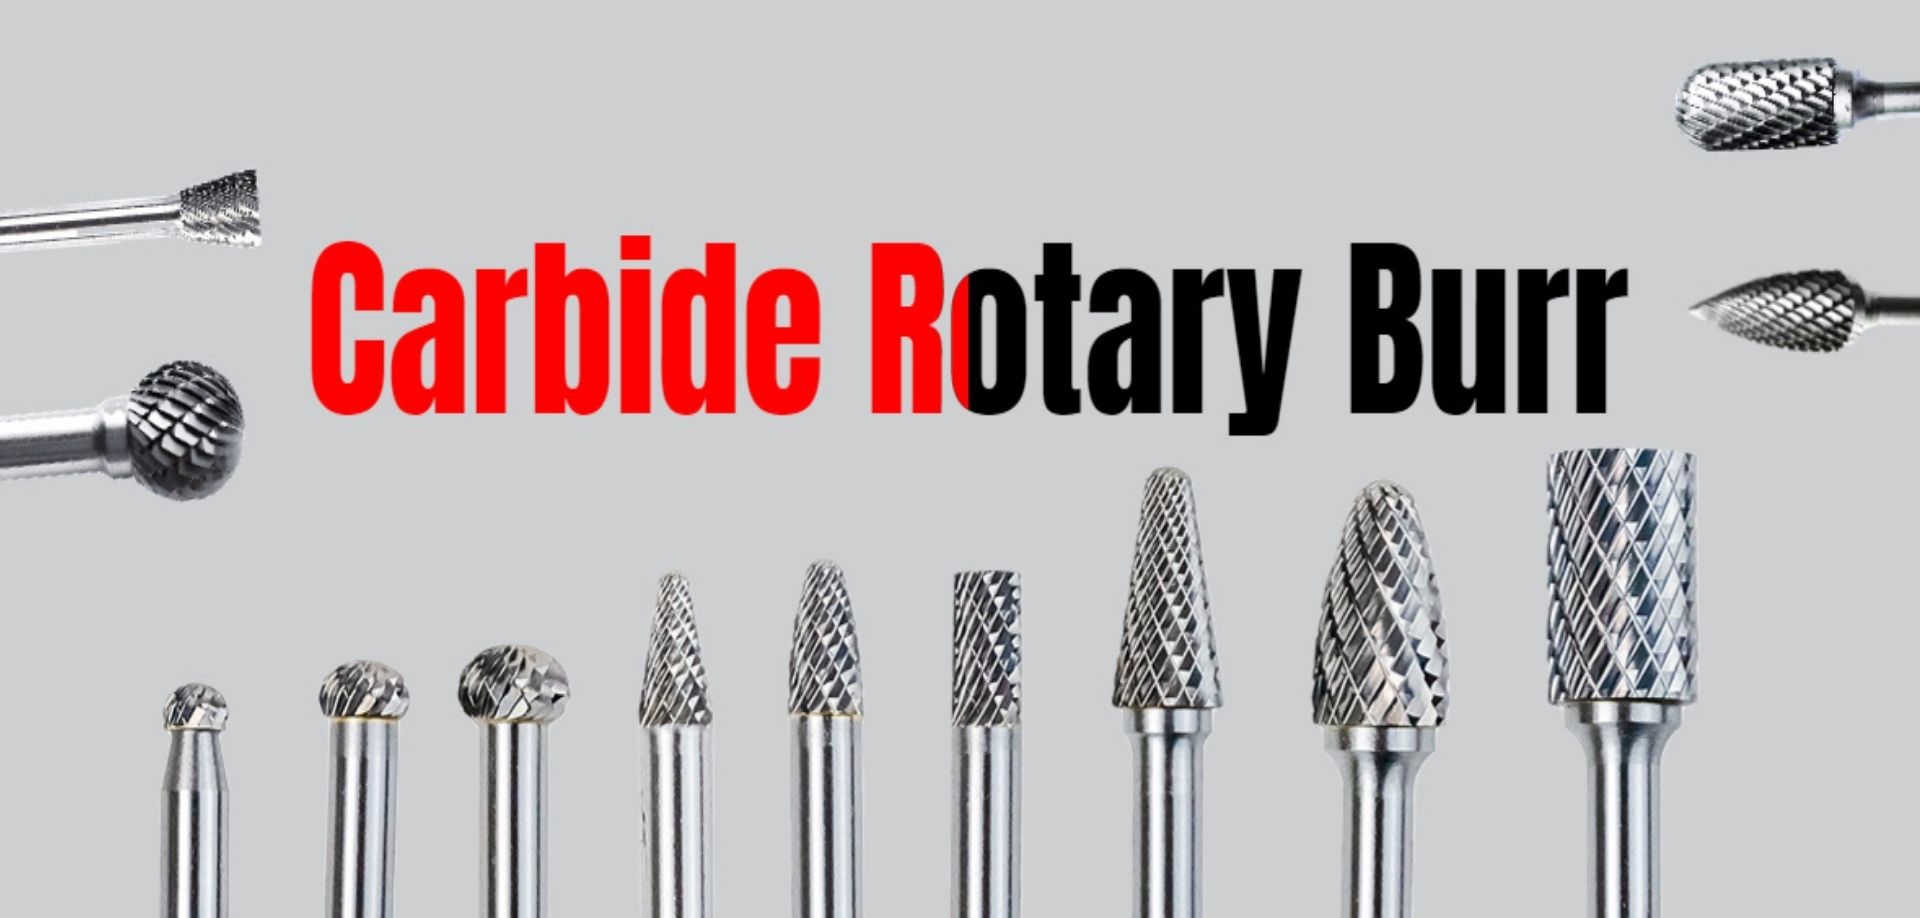 carbide rotary burr banner